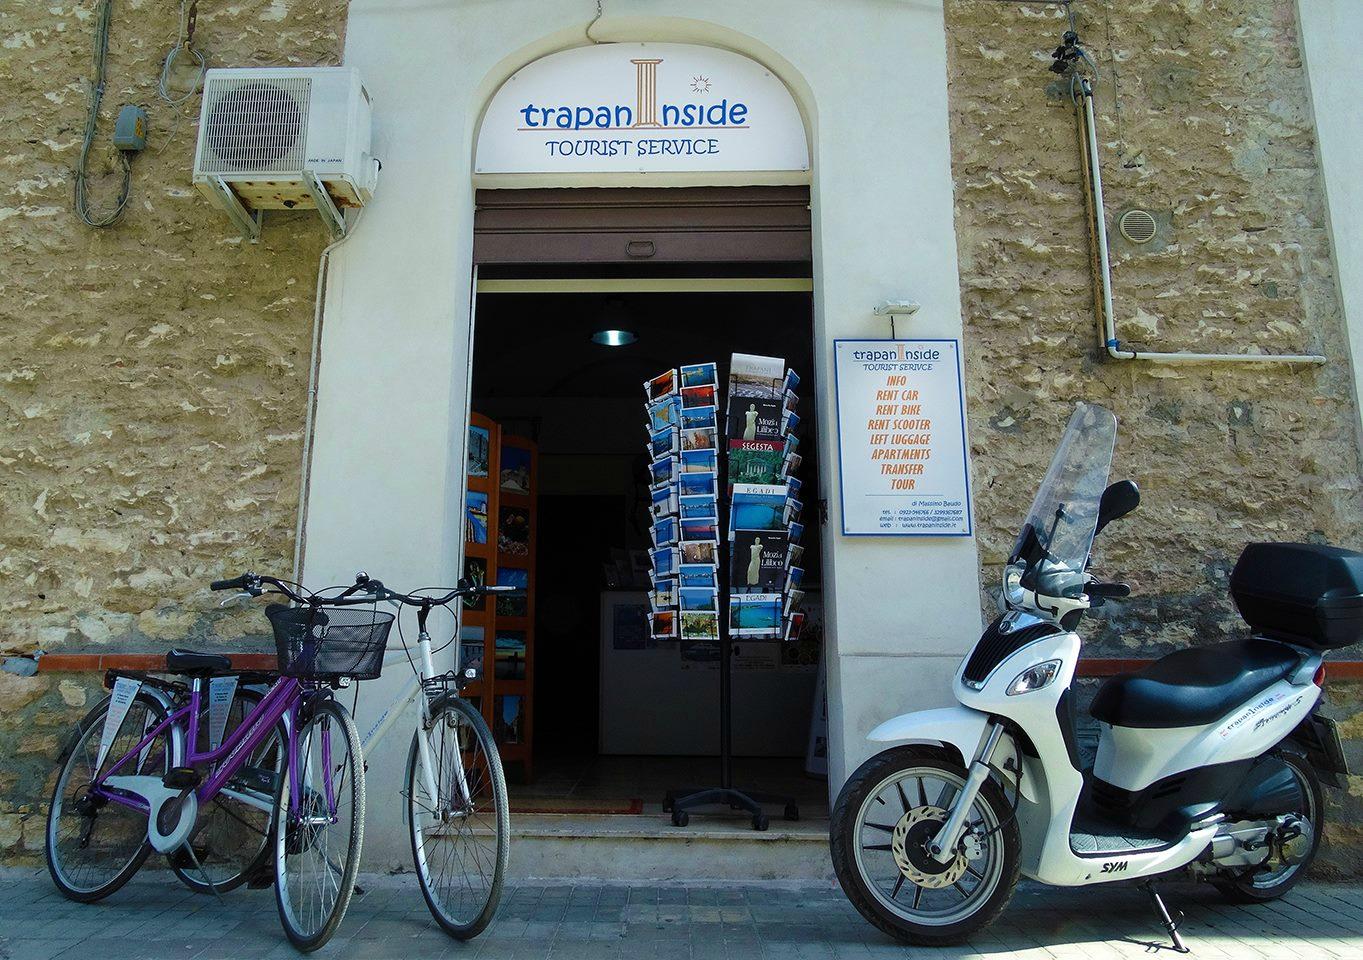 TrapanInside - Tourist Service